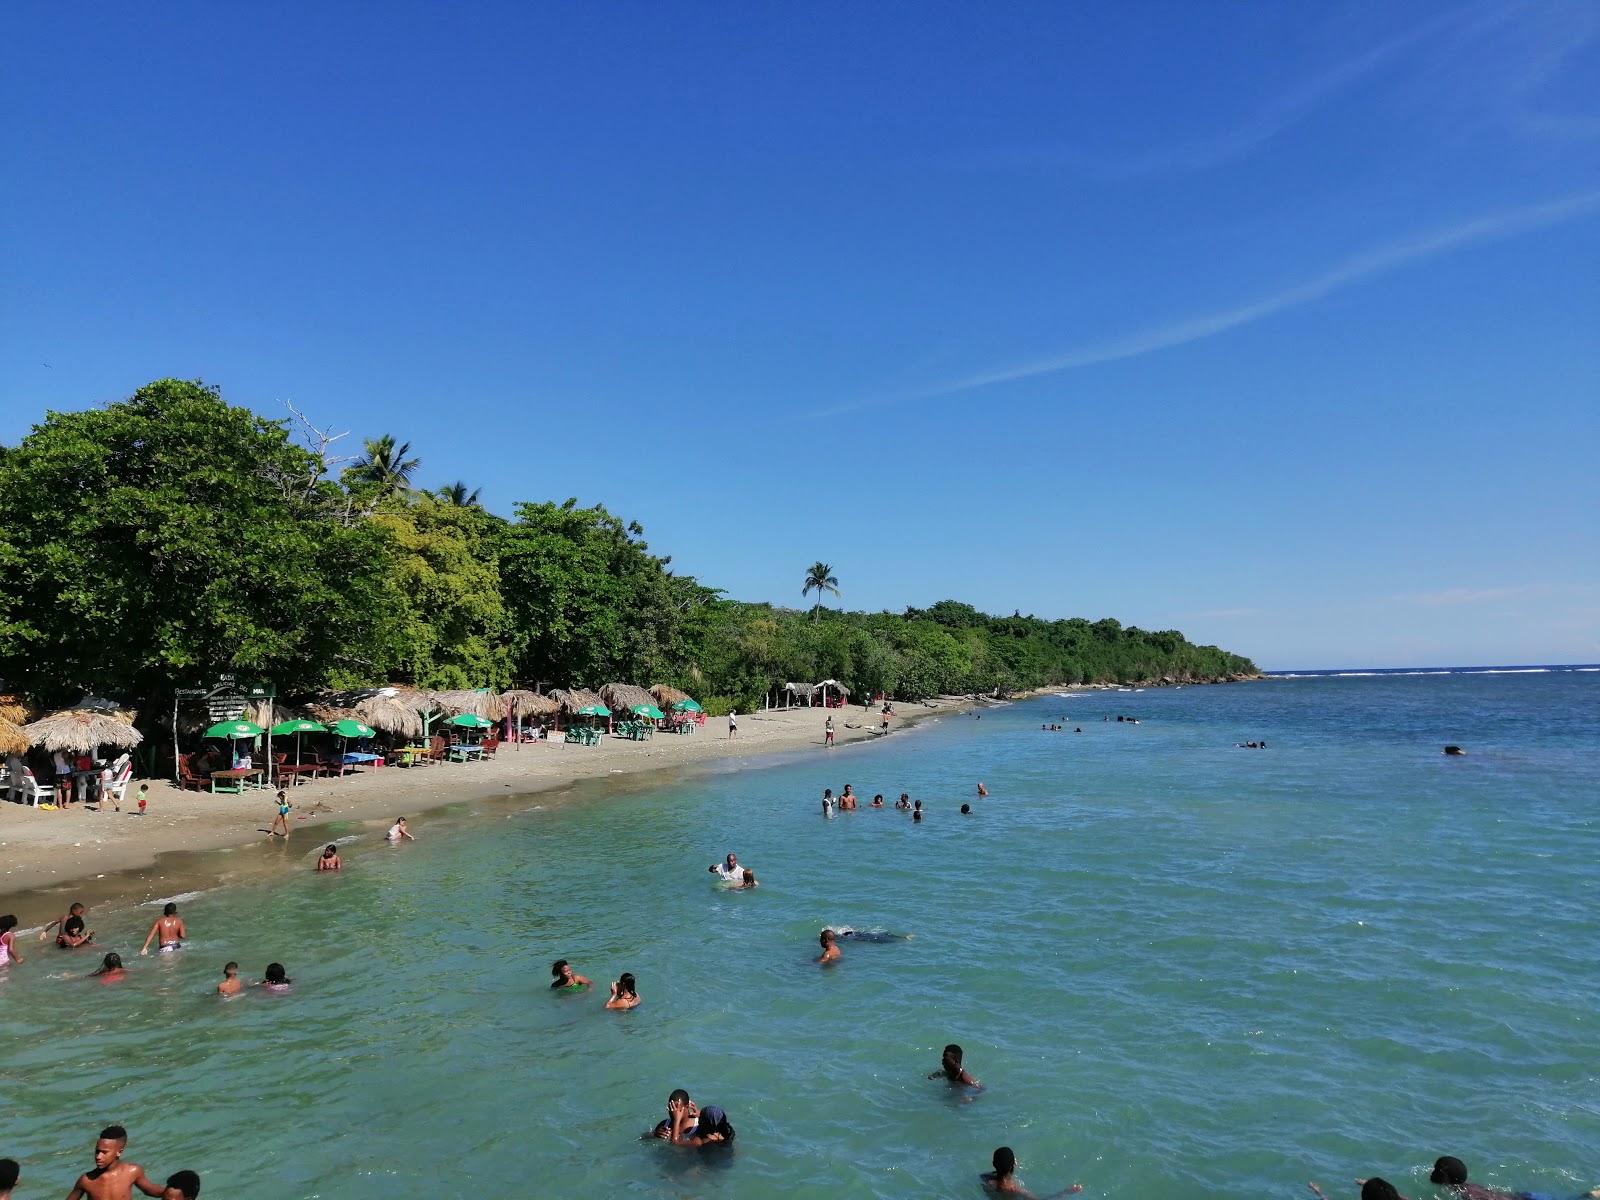 Fotografija Palenque beach z siv pesek površino